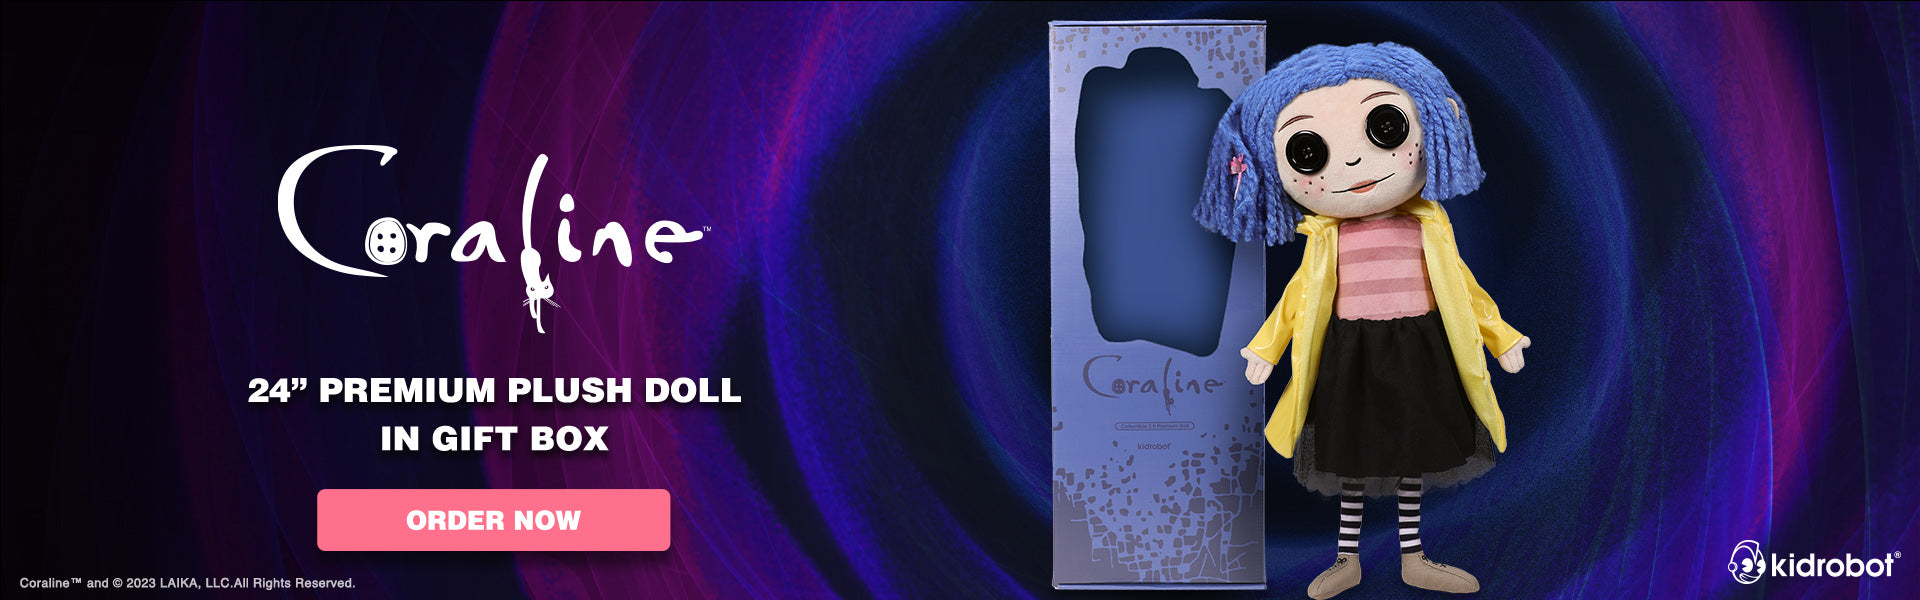 Coraline 24” Premium Plush Doll in Gift Box